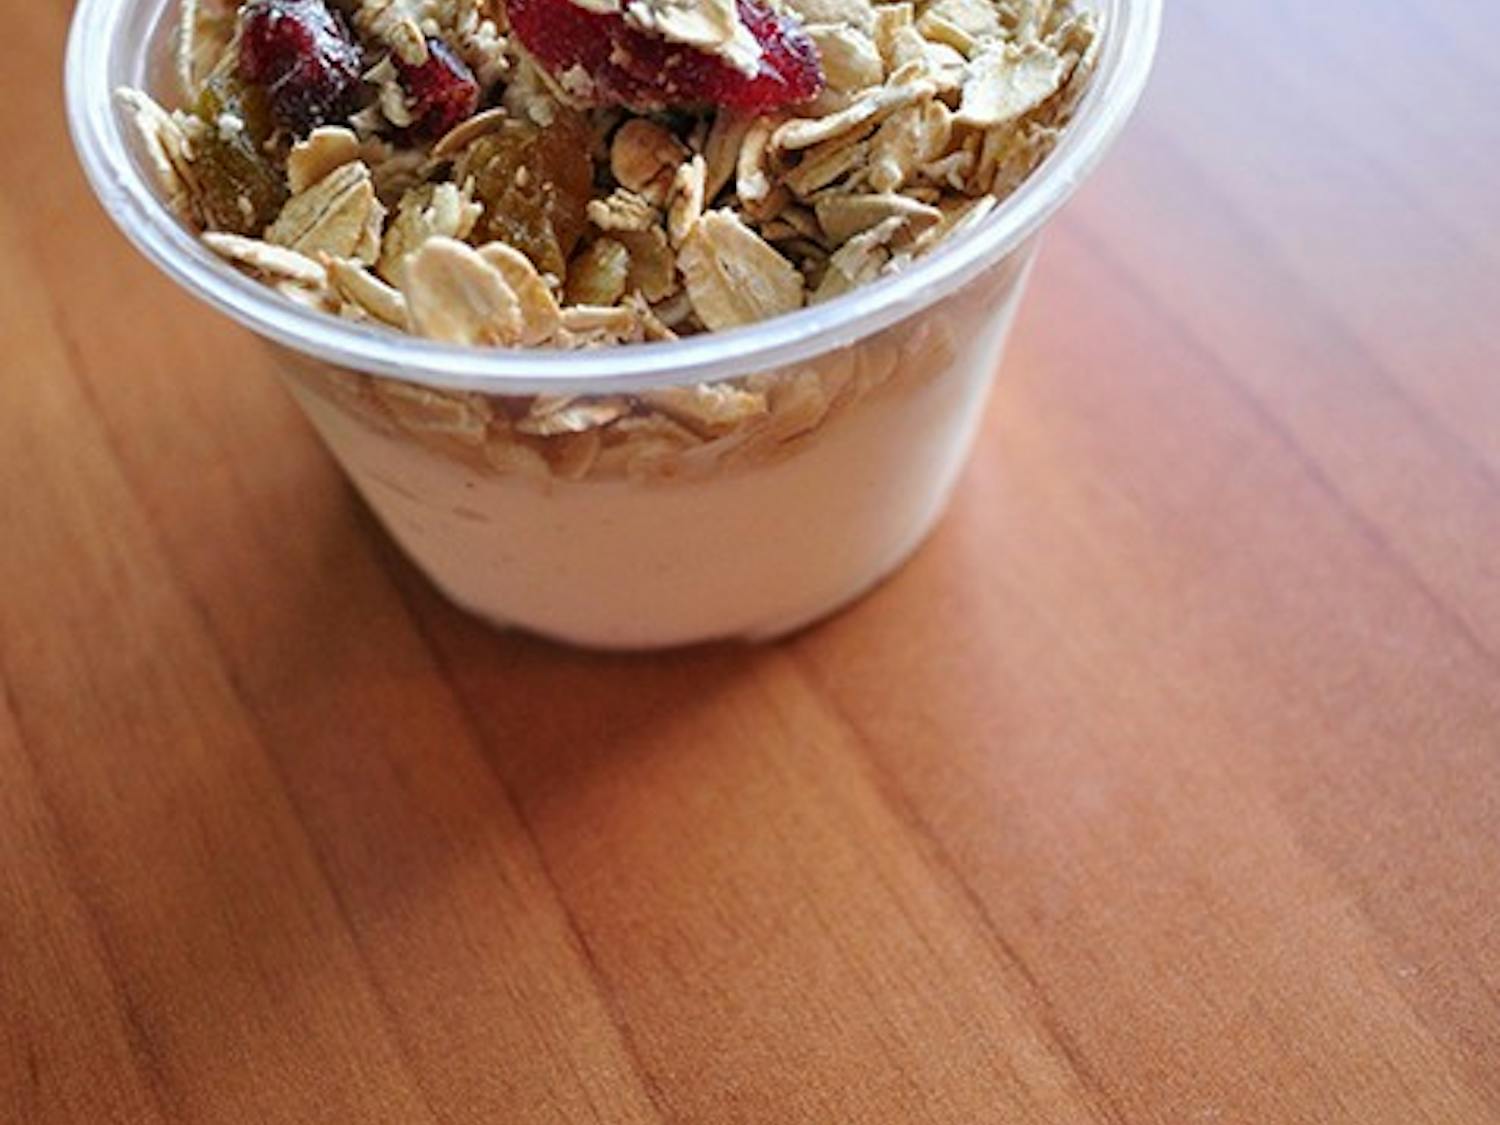 Homemade vanilla bean yogurt with granola, cranberries, golden raisins and sunflower seeds